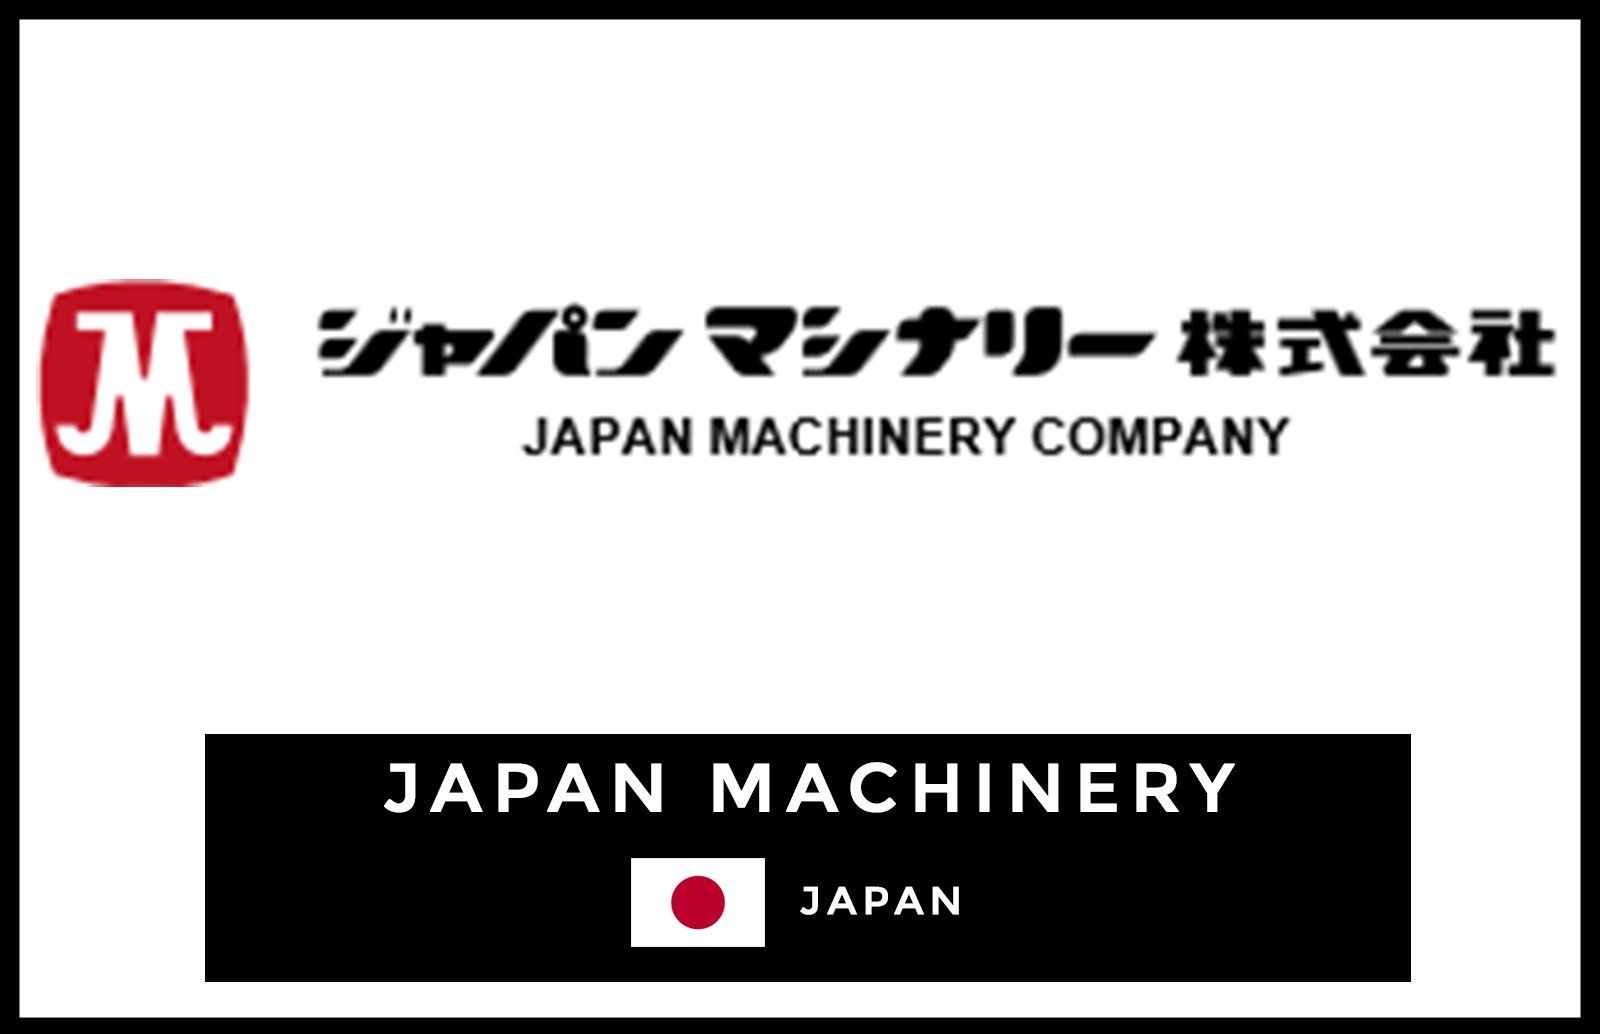 Japan Machinery